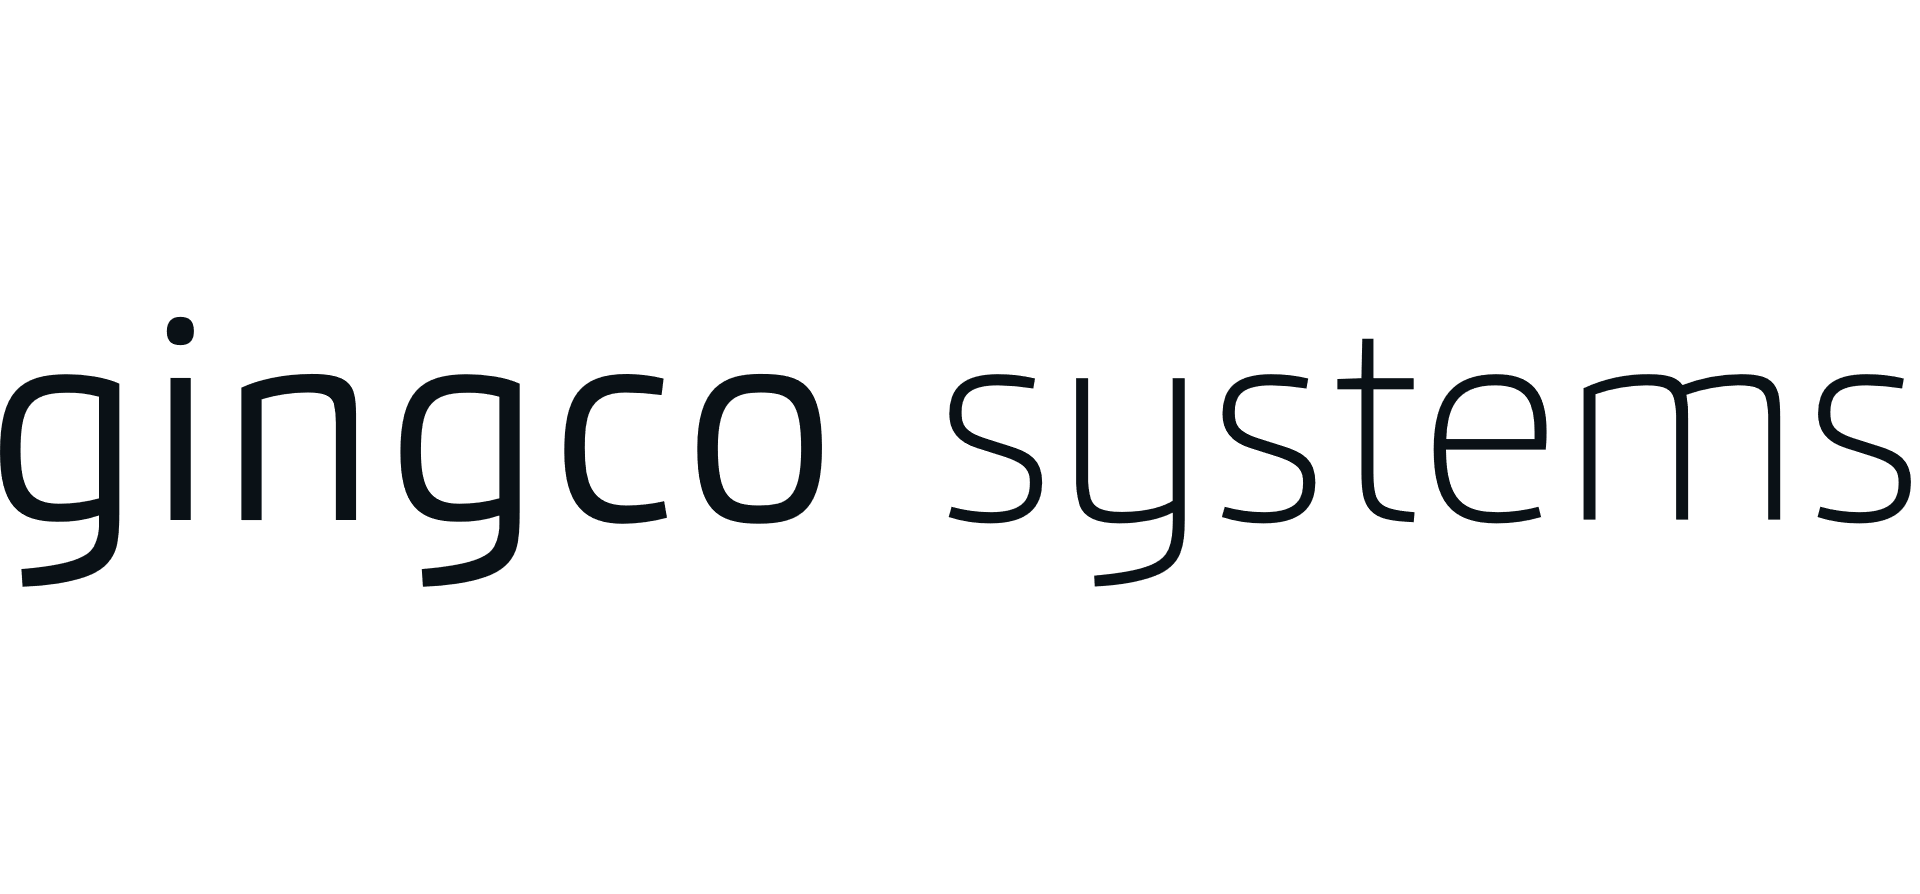  Gingco systems logo black